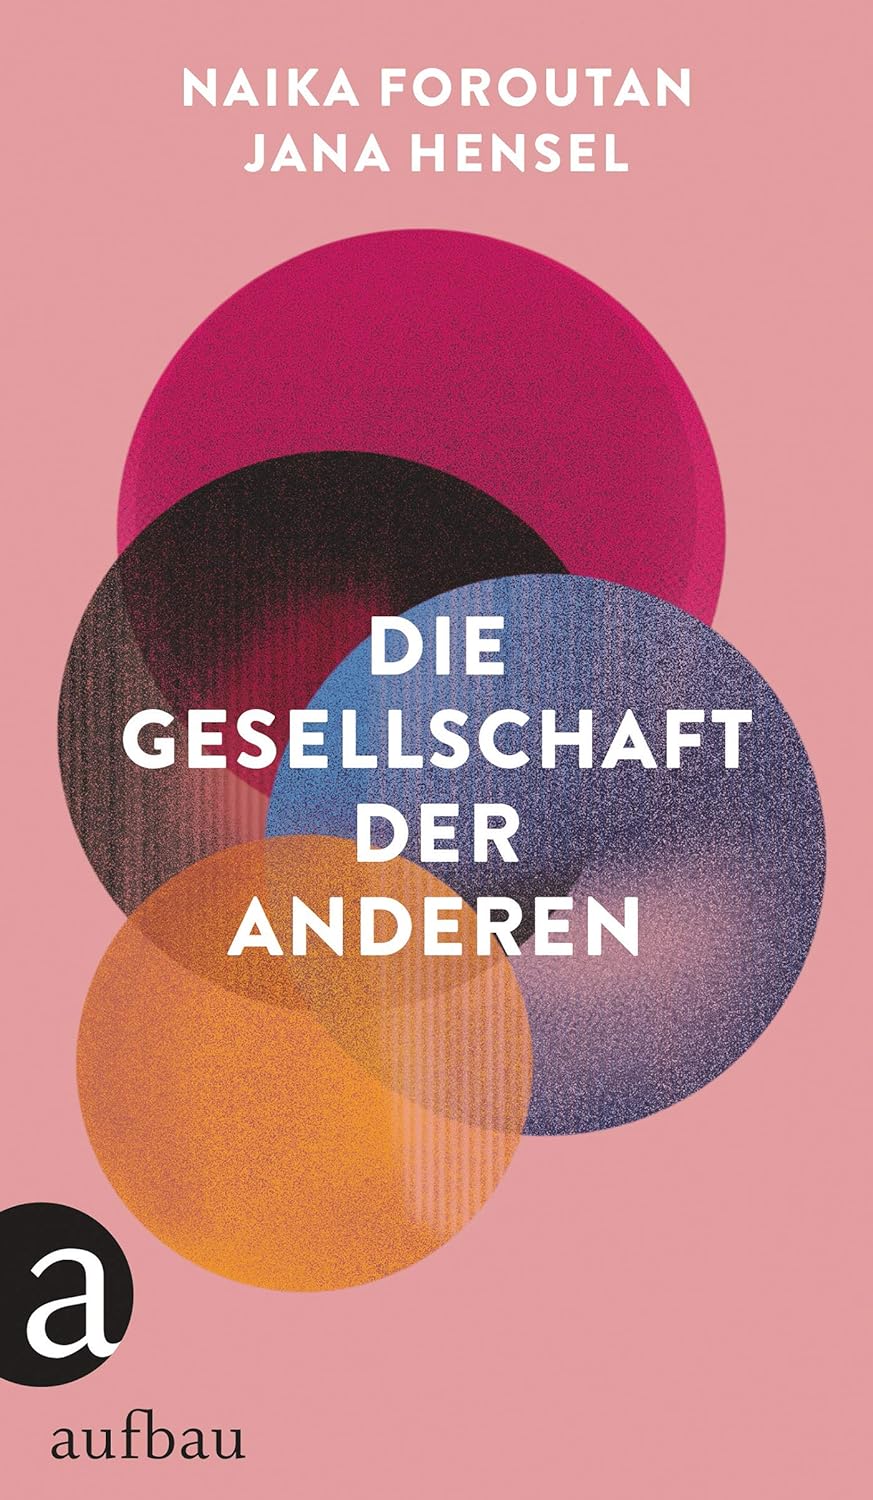 Jana Hensel, Naika Foroutan: Die Gesellschaft der Anderen (German language, 2020)